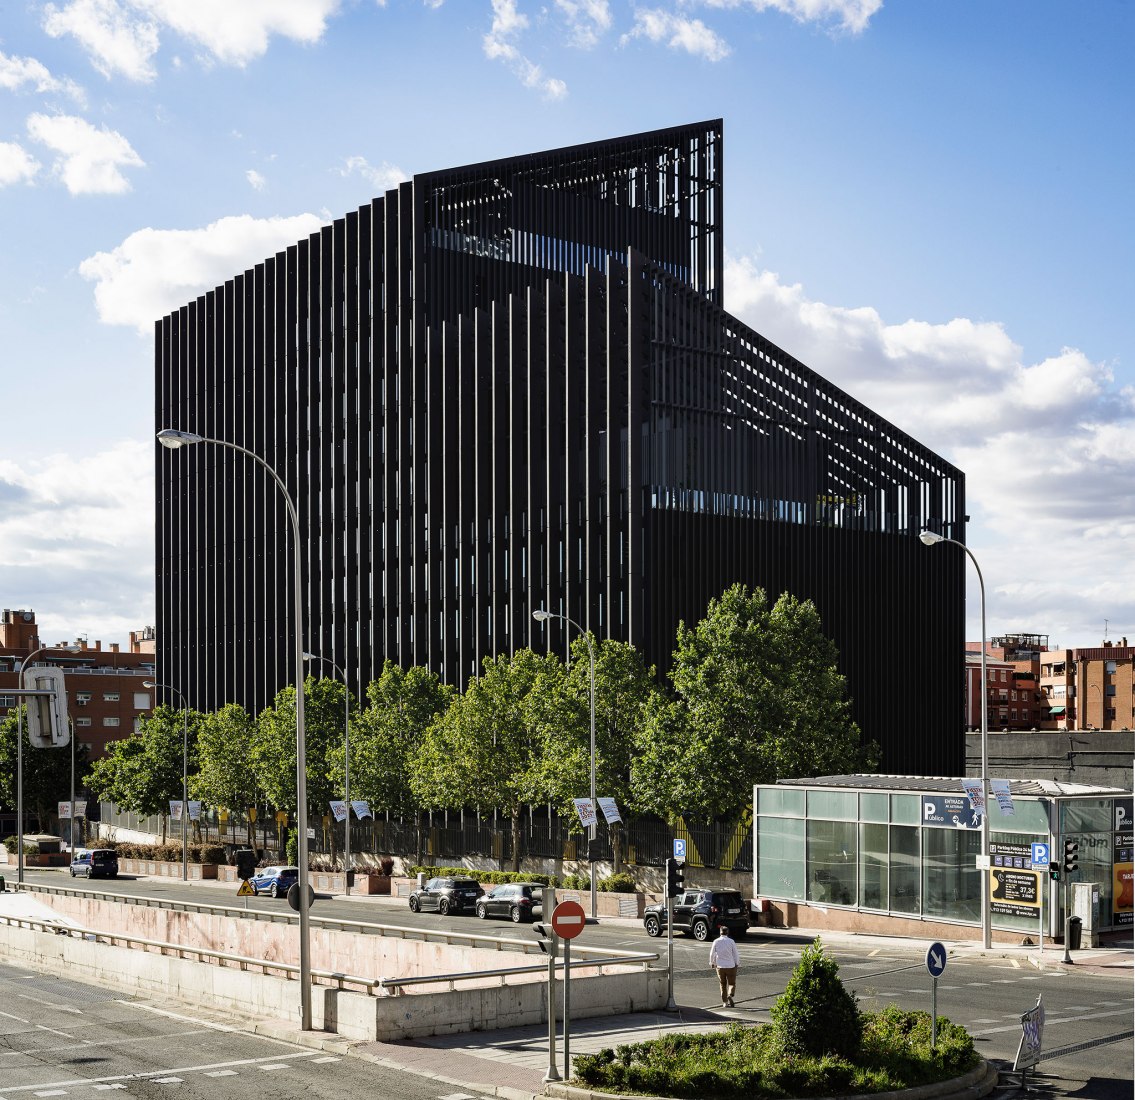 Metro de Madrid Headquarters and Transport Complex by Nexo + Gutiérrez-delaFuente + Perea. Photograph by Fernando Alda.